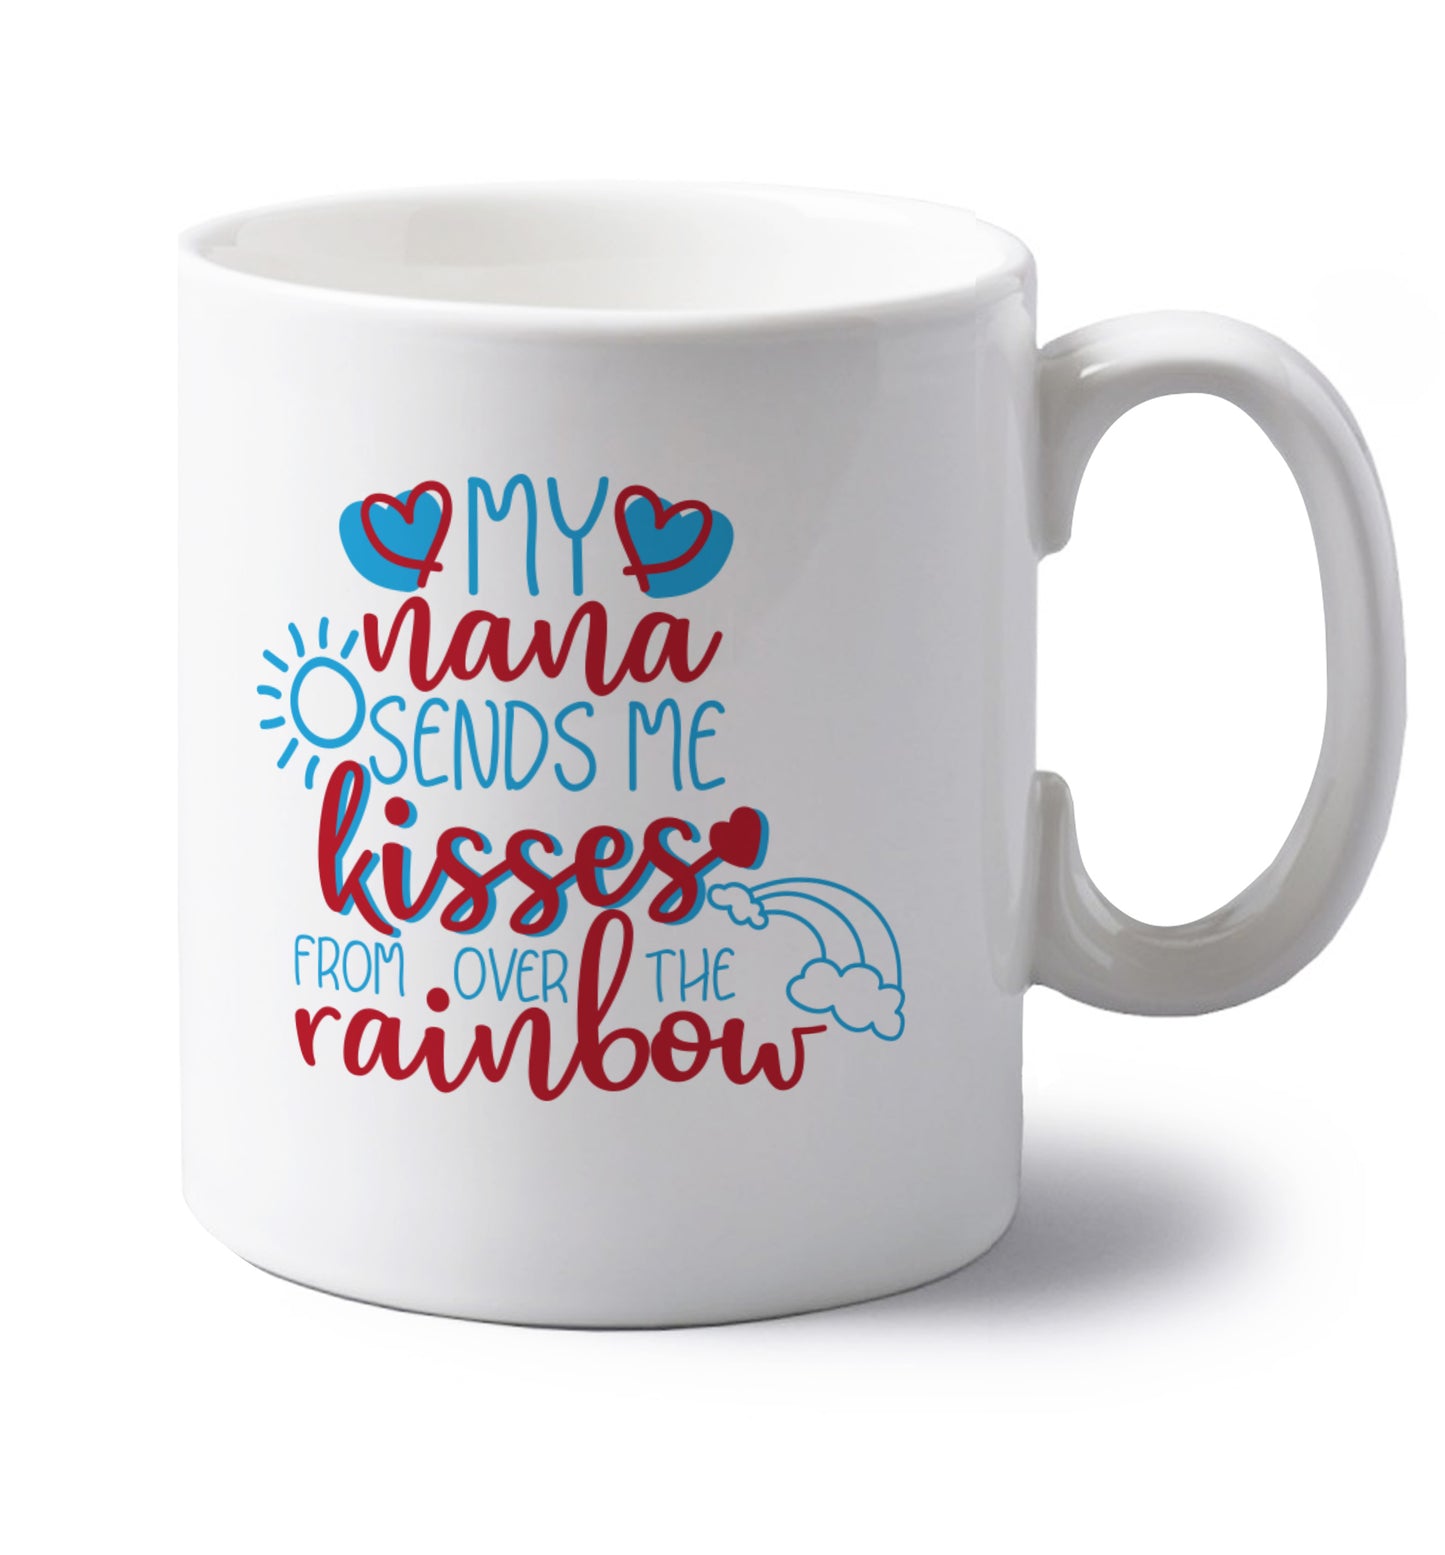 My nana sends me kisses from over the rainbow left handed white ceramic mug 